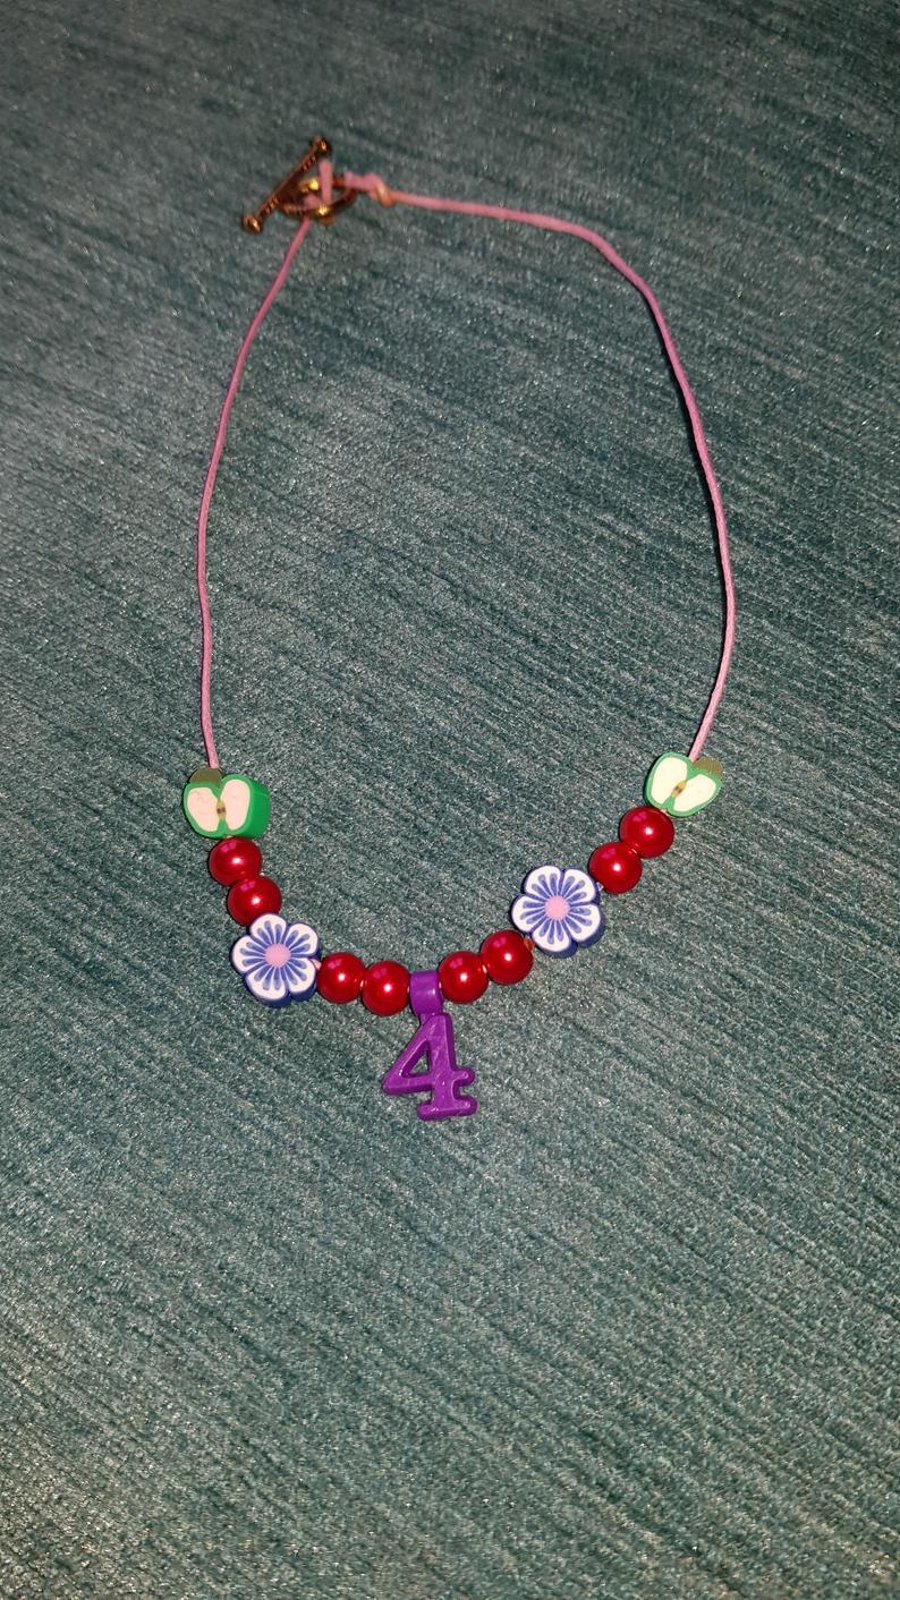 Children's '4' Charm Necklace